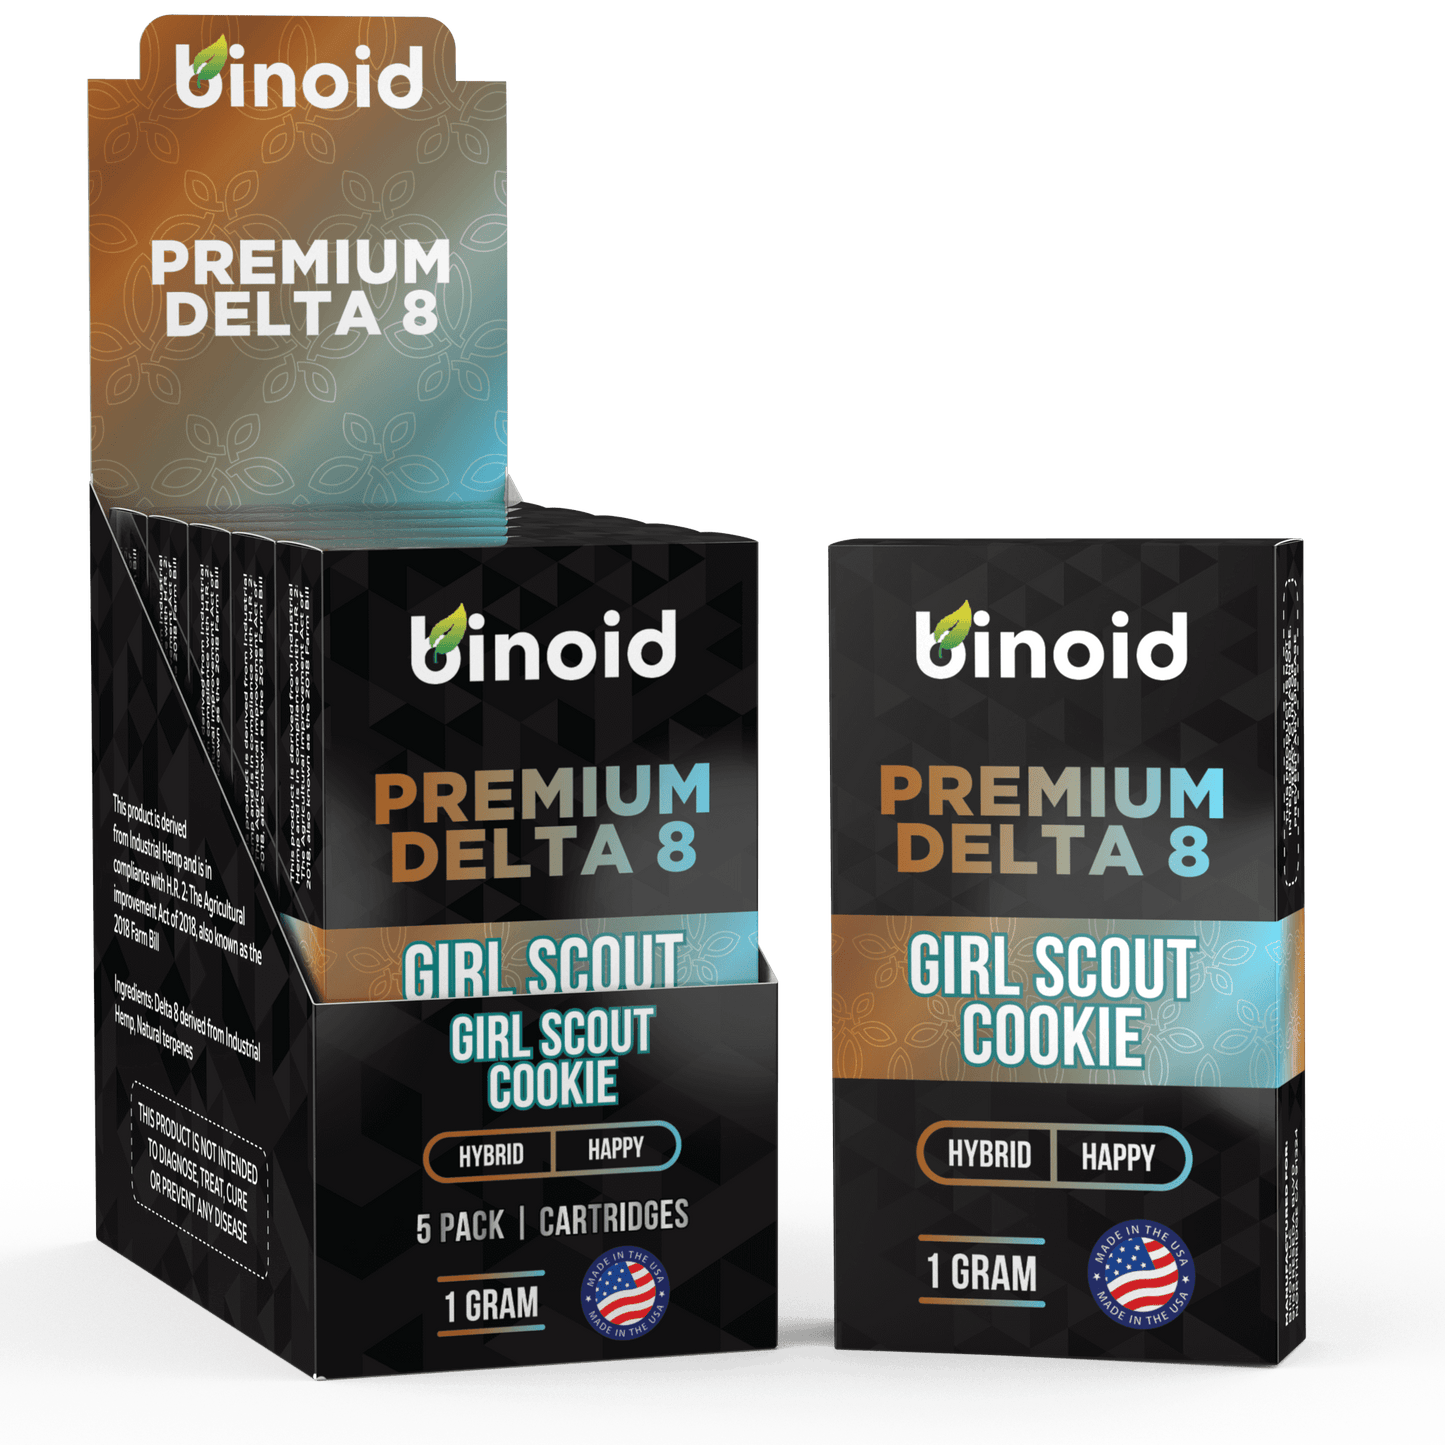 Binoid Delta 8 THC Vape Cartridge - Girl Scout Cookie Best Sales Price - Vape Cartridges